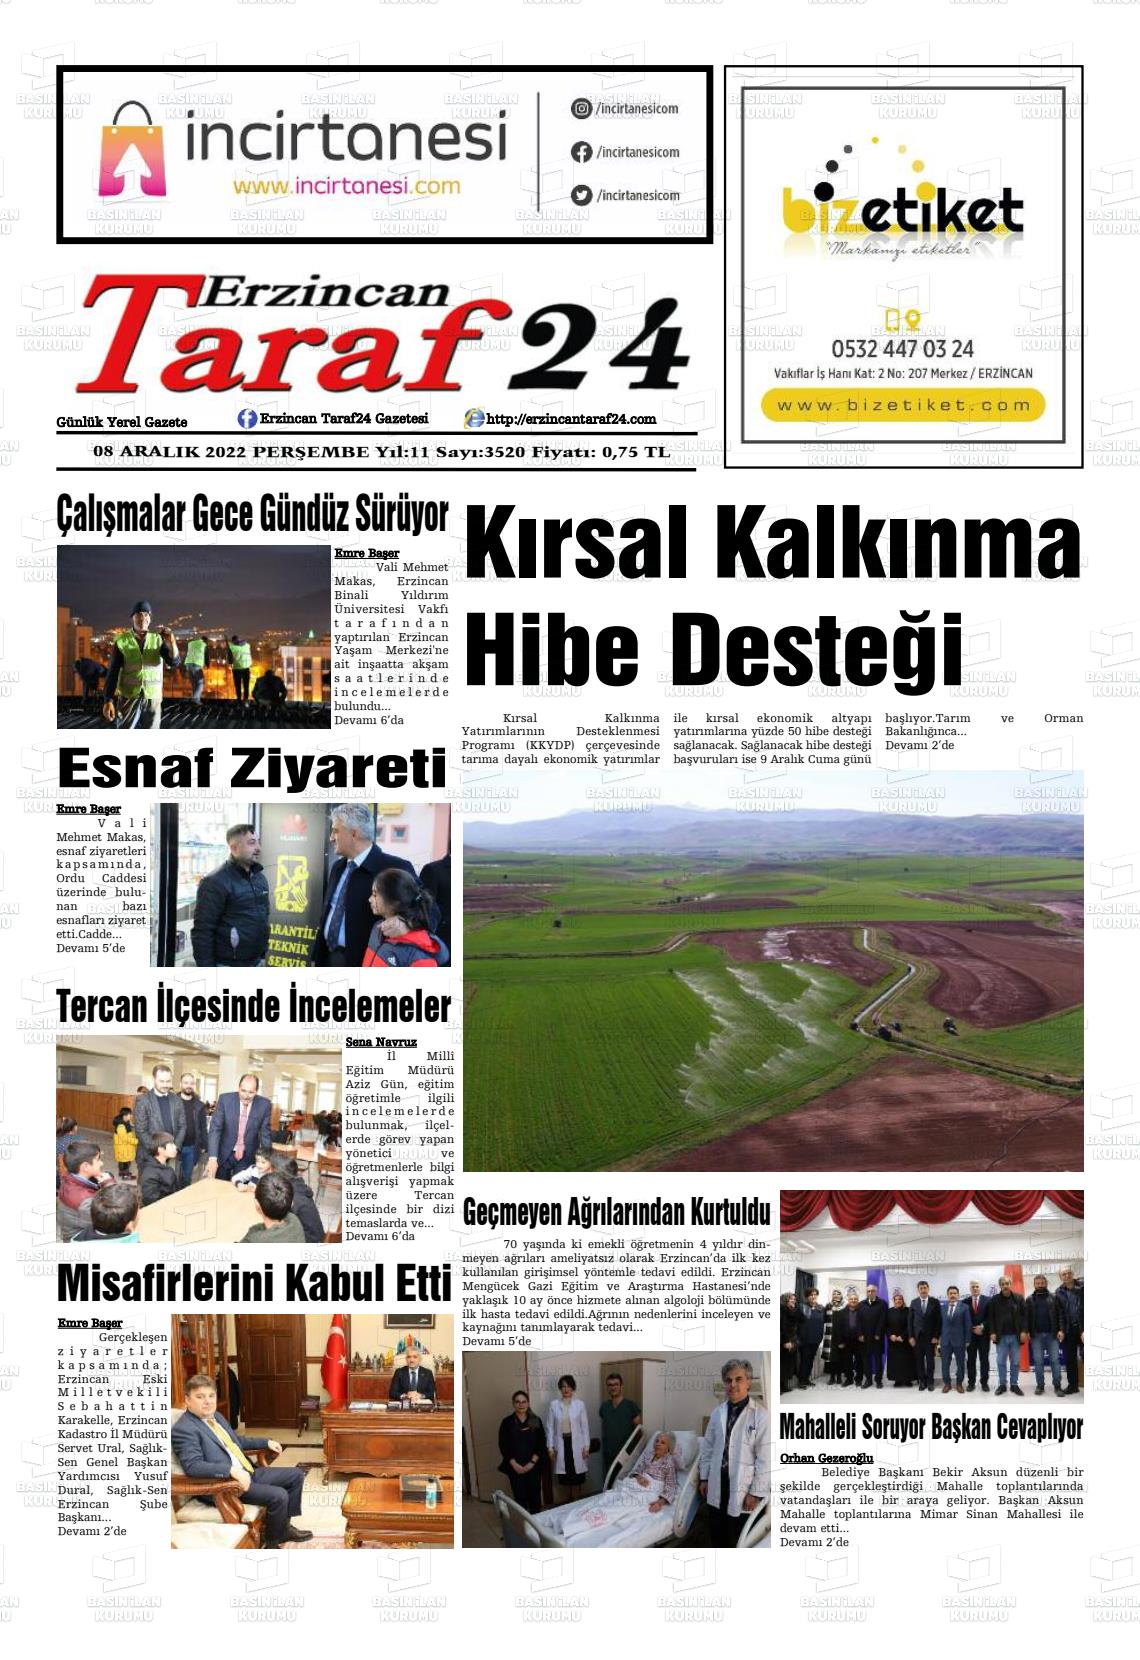 08 Aralık 2022 Erzincan Taraf 24 Gazete Manşeti